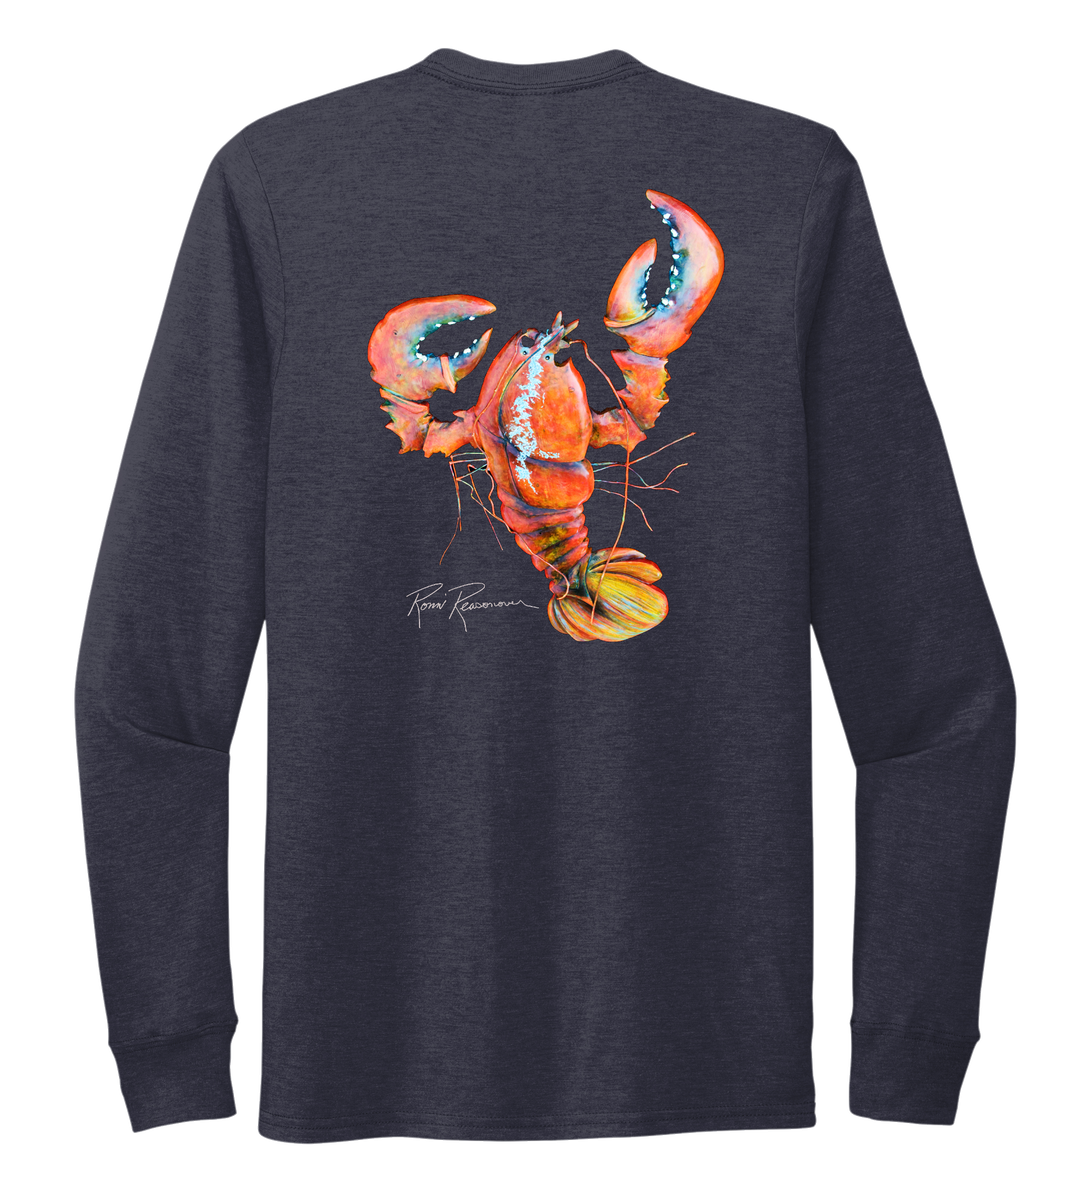 Hollister Mens Solid Ringer T-shirt Lobster Point